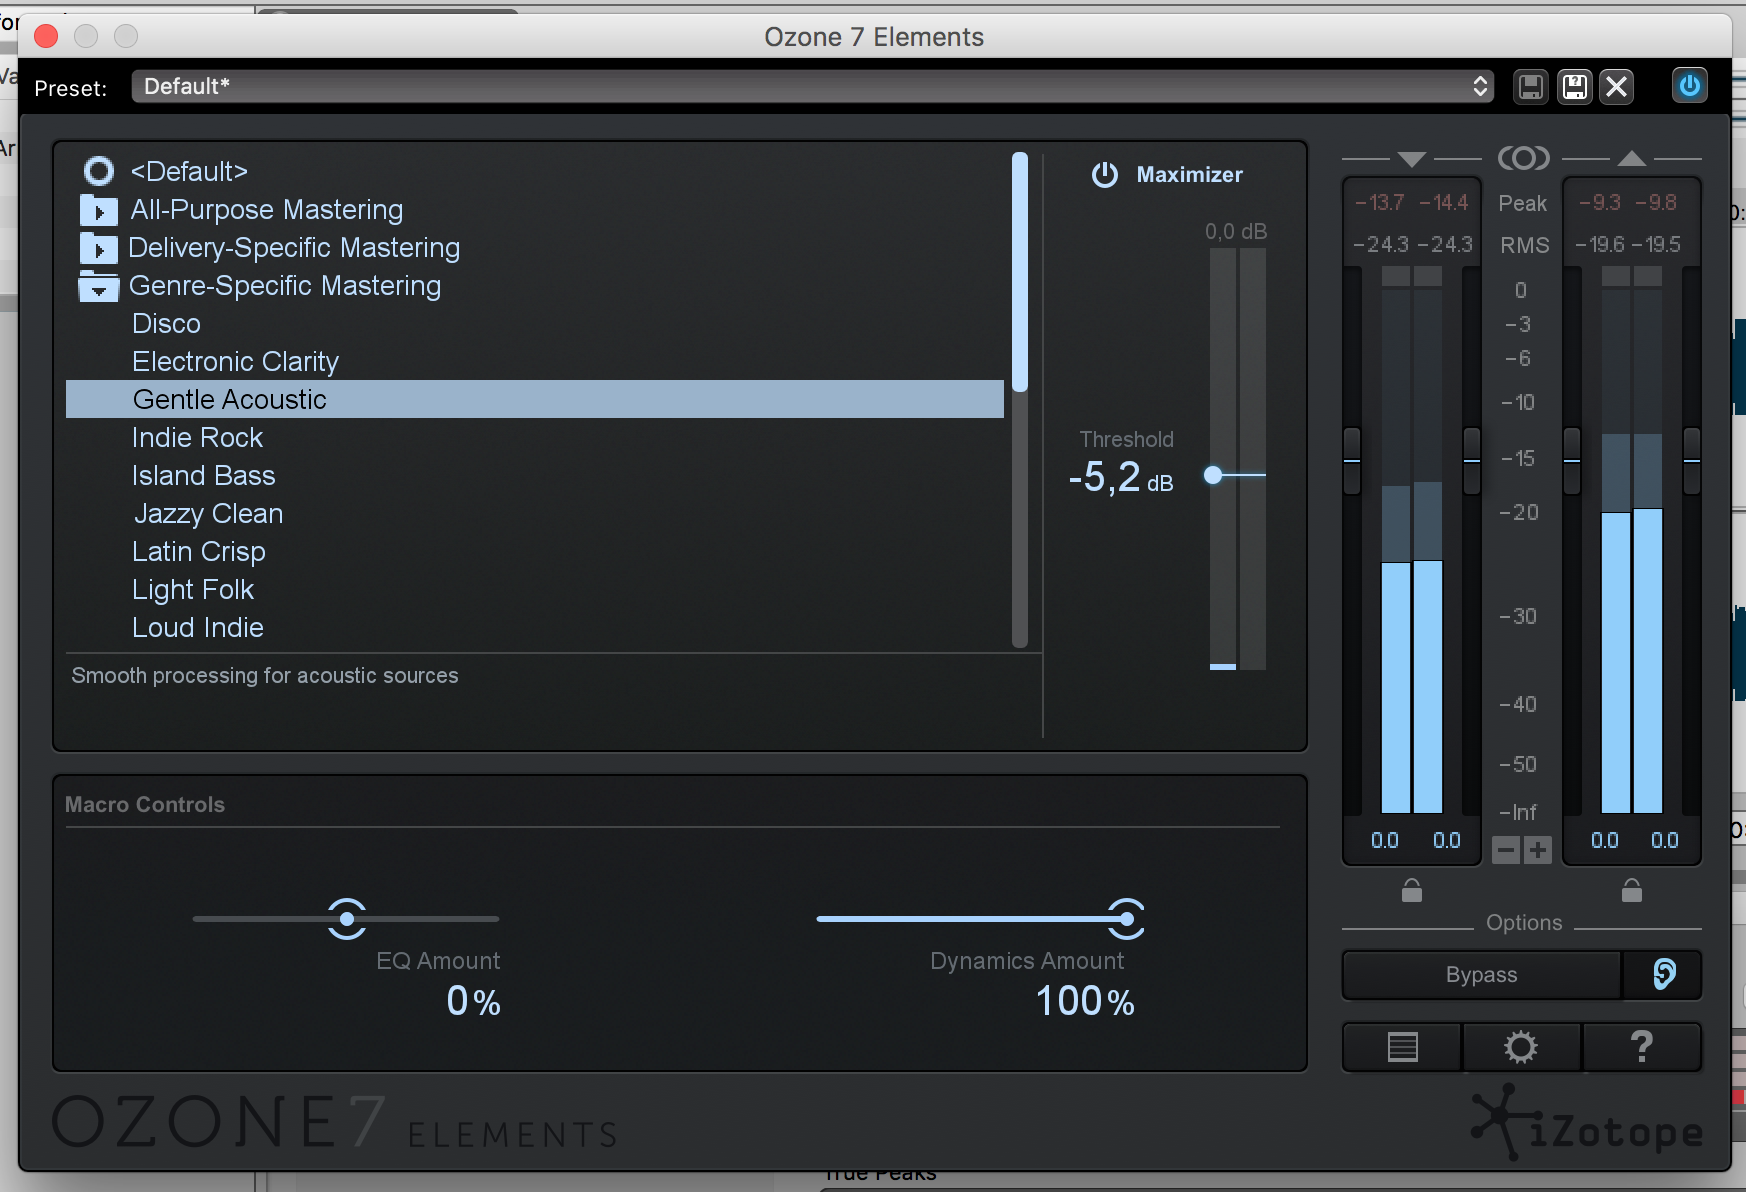 sound forge pro mac current version